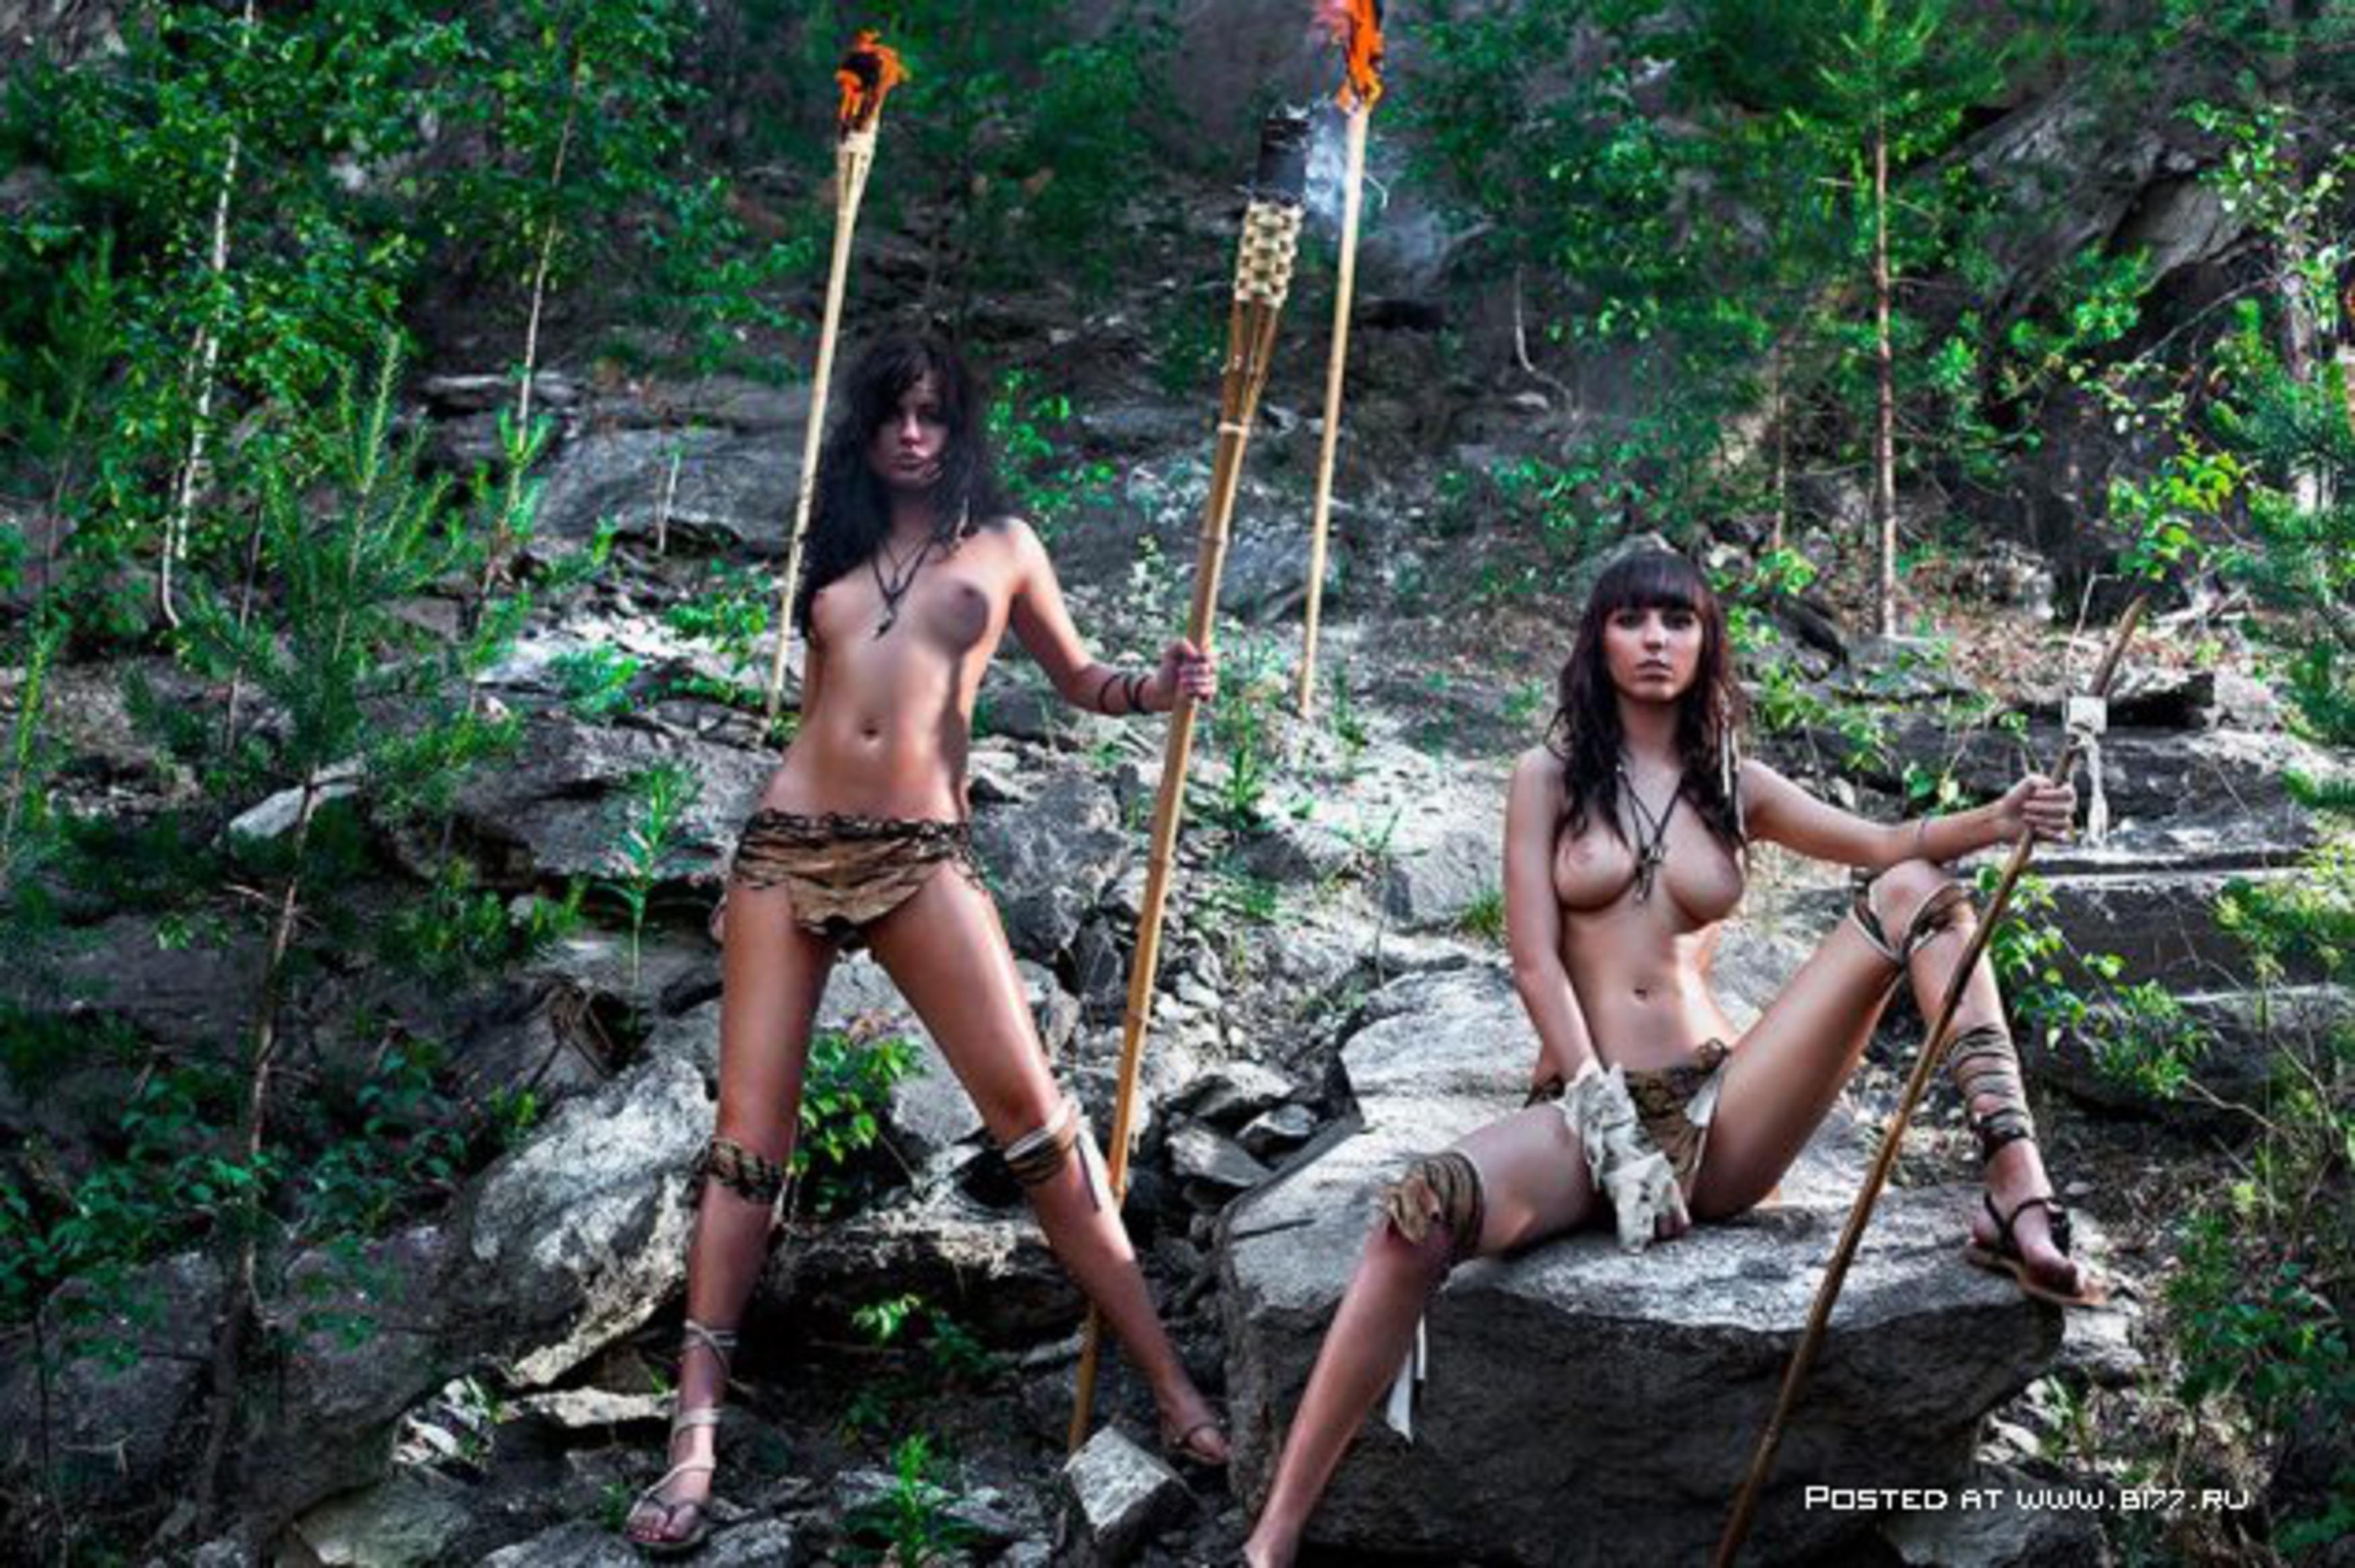 Naked amazon women galleries smut movie